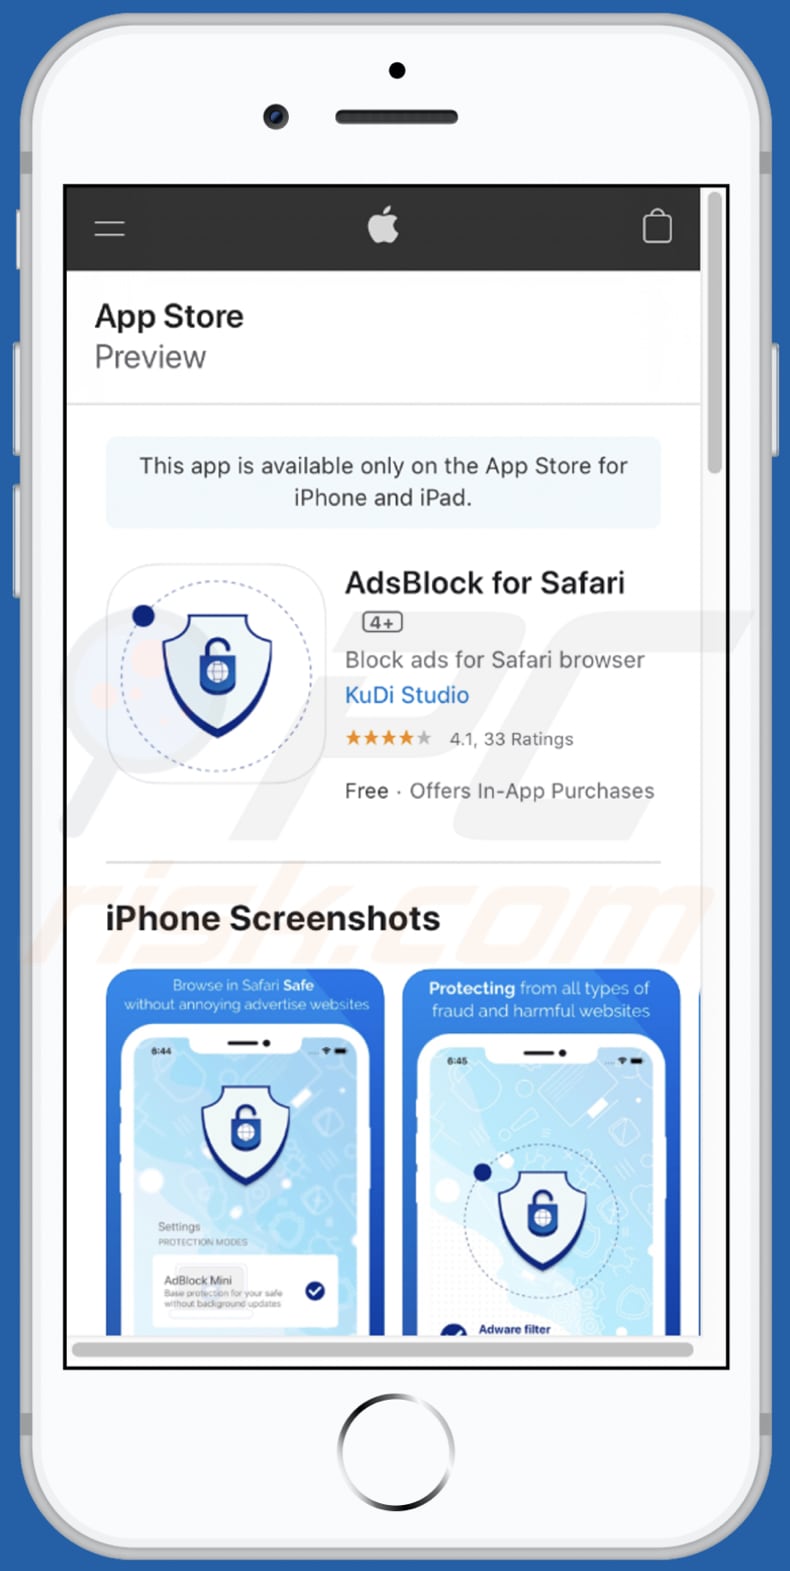 application-update.com promotes Ads Block for Safari